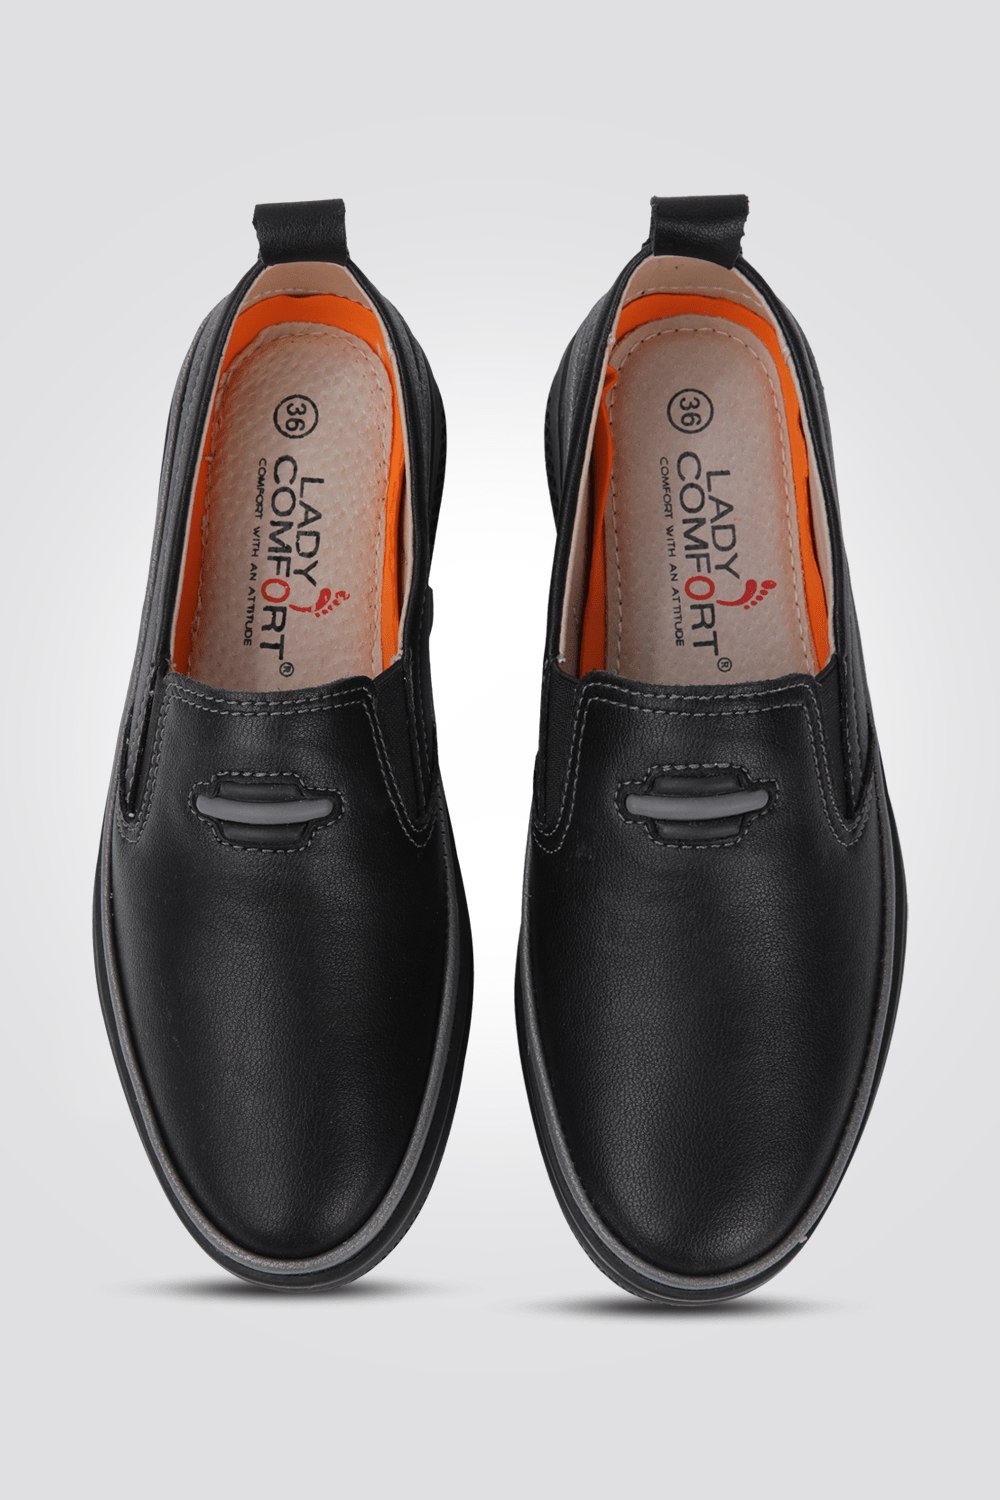 LADY COMFORT - נעל נוחות לנשים בצבע שחור - MASHBIR//365